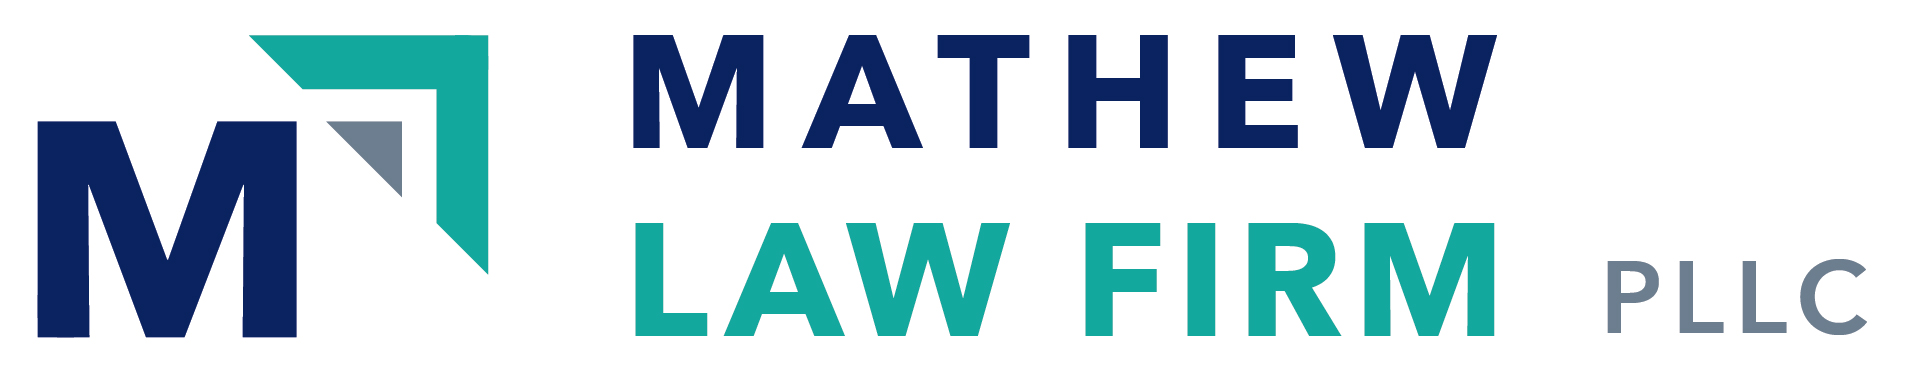 Mathew Law Firm